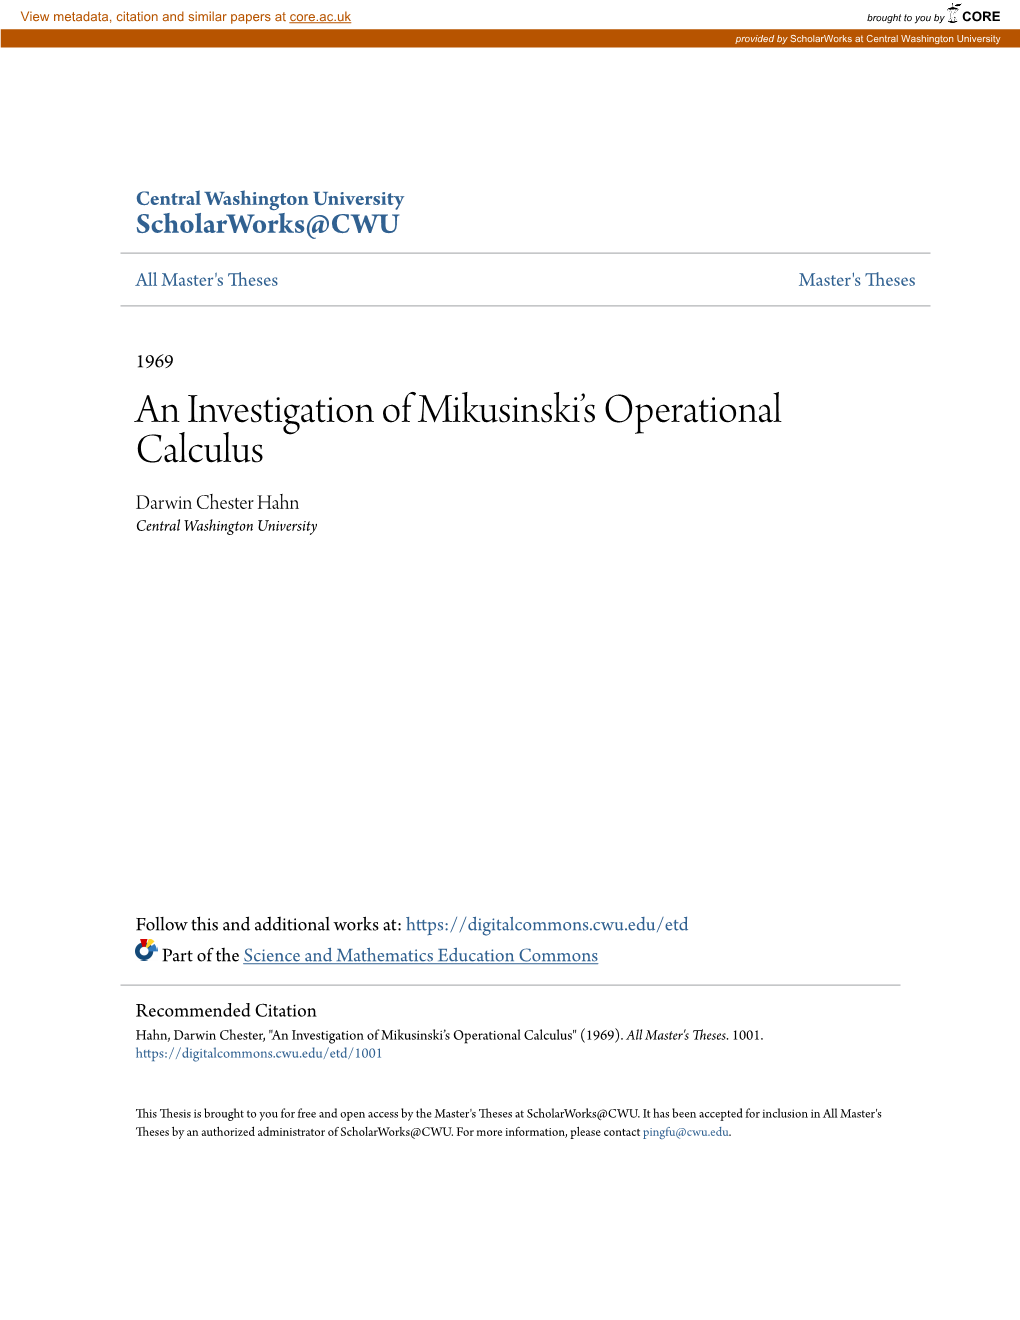 An Investigation of Mikusinski's Operational Calculus